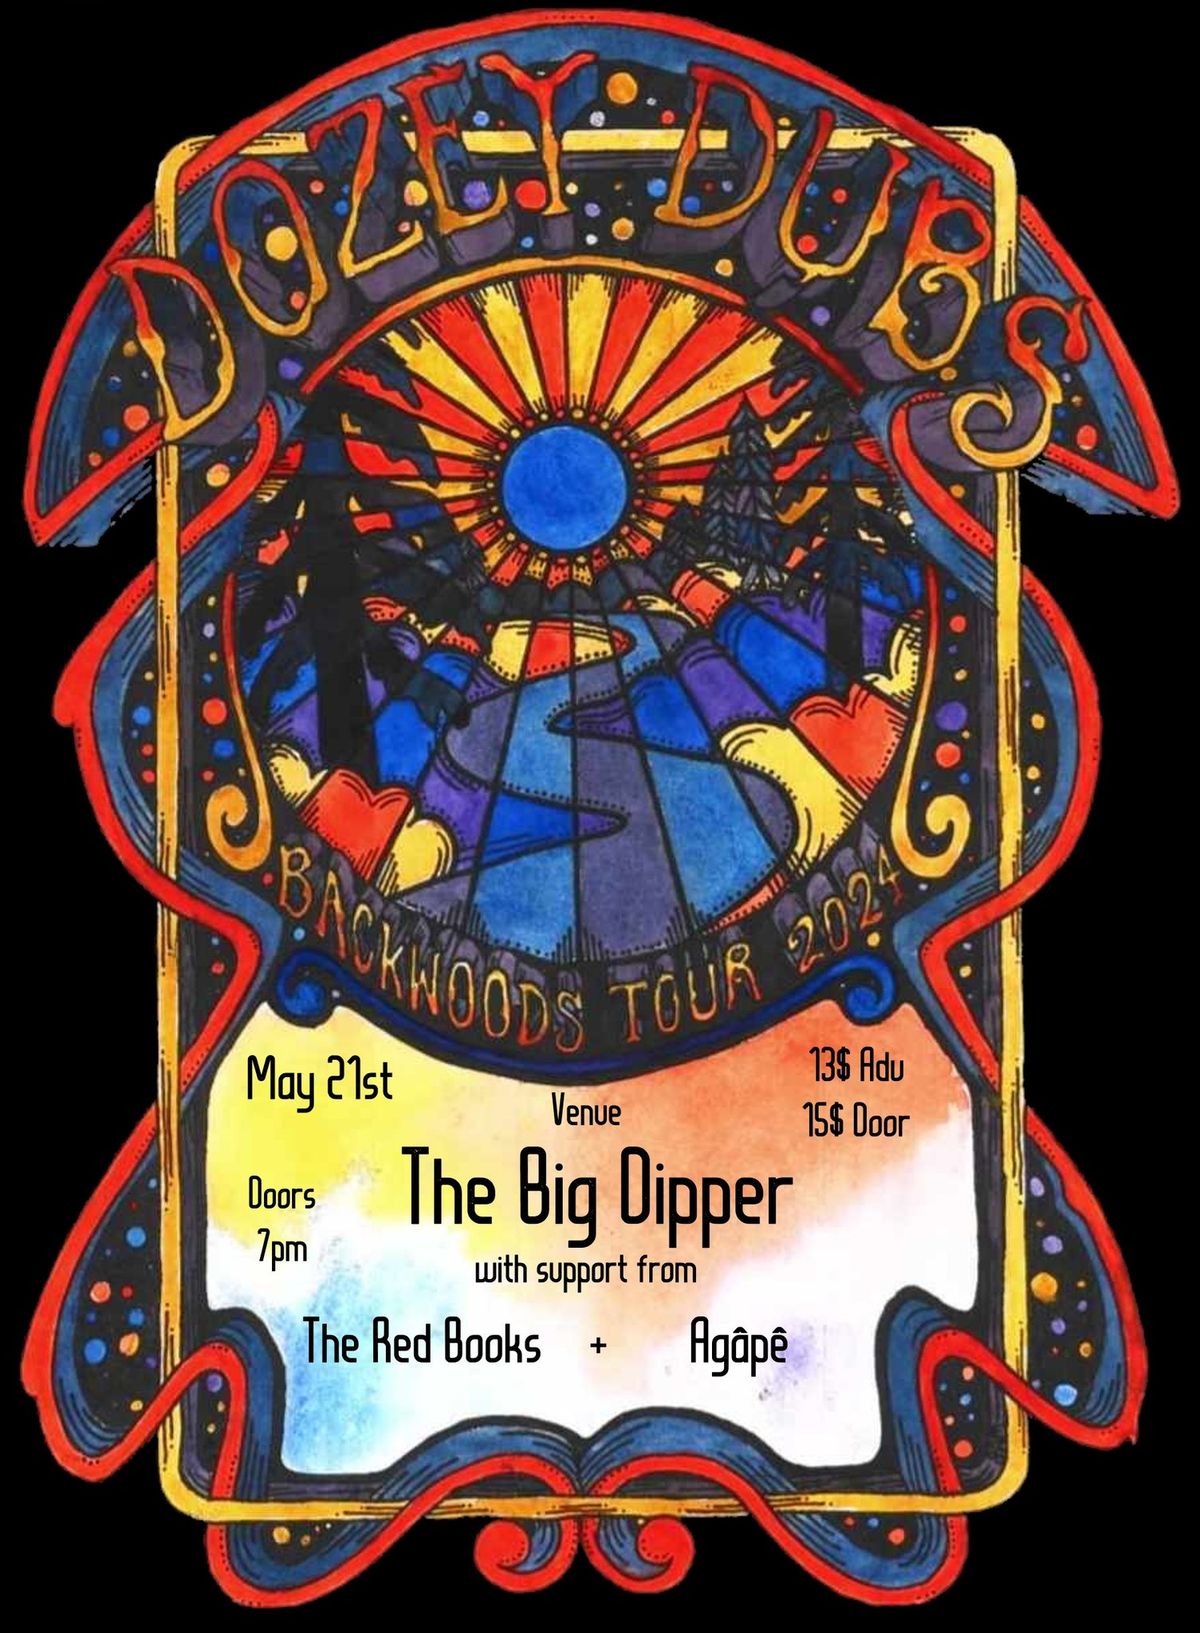 Dozey Dubs Backwoods Tour at The Big Dipper